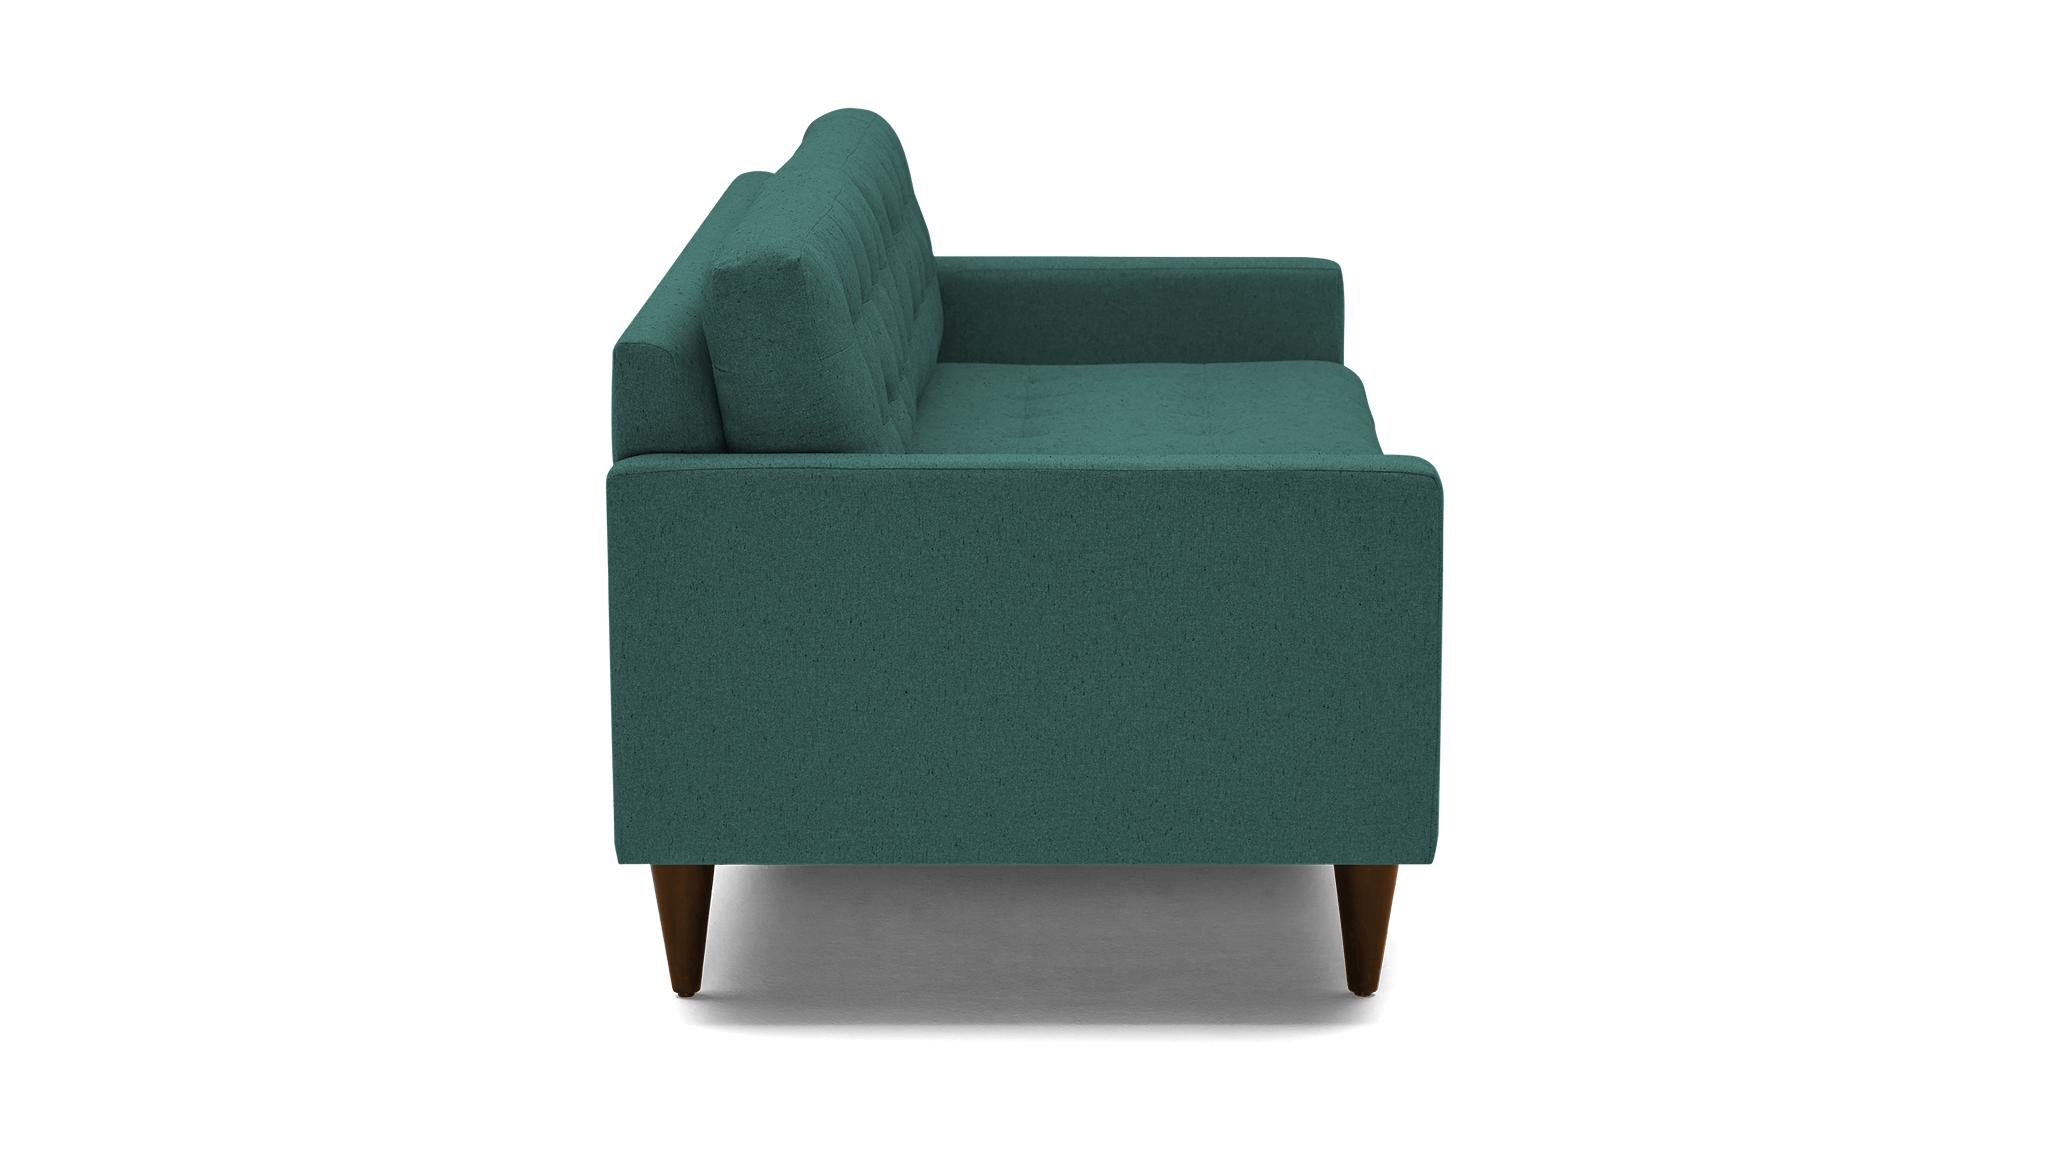 Blue Eliot Mid Century Modern Sofa - Prime Peacock - Mocha - Image 2